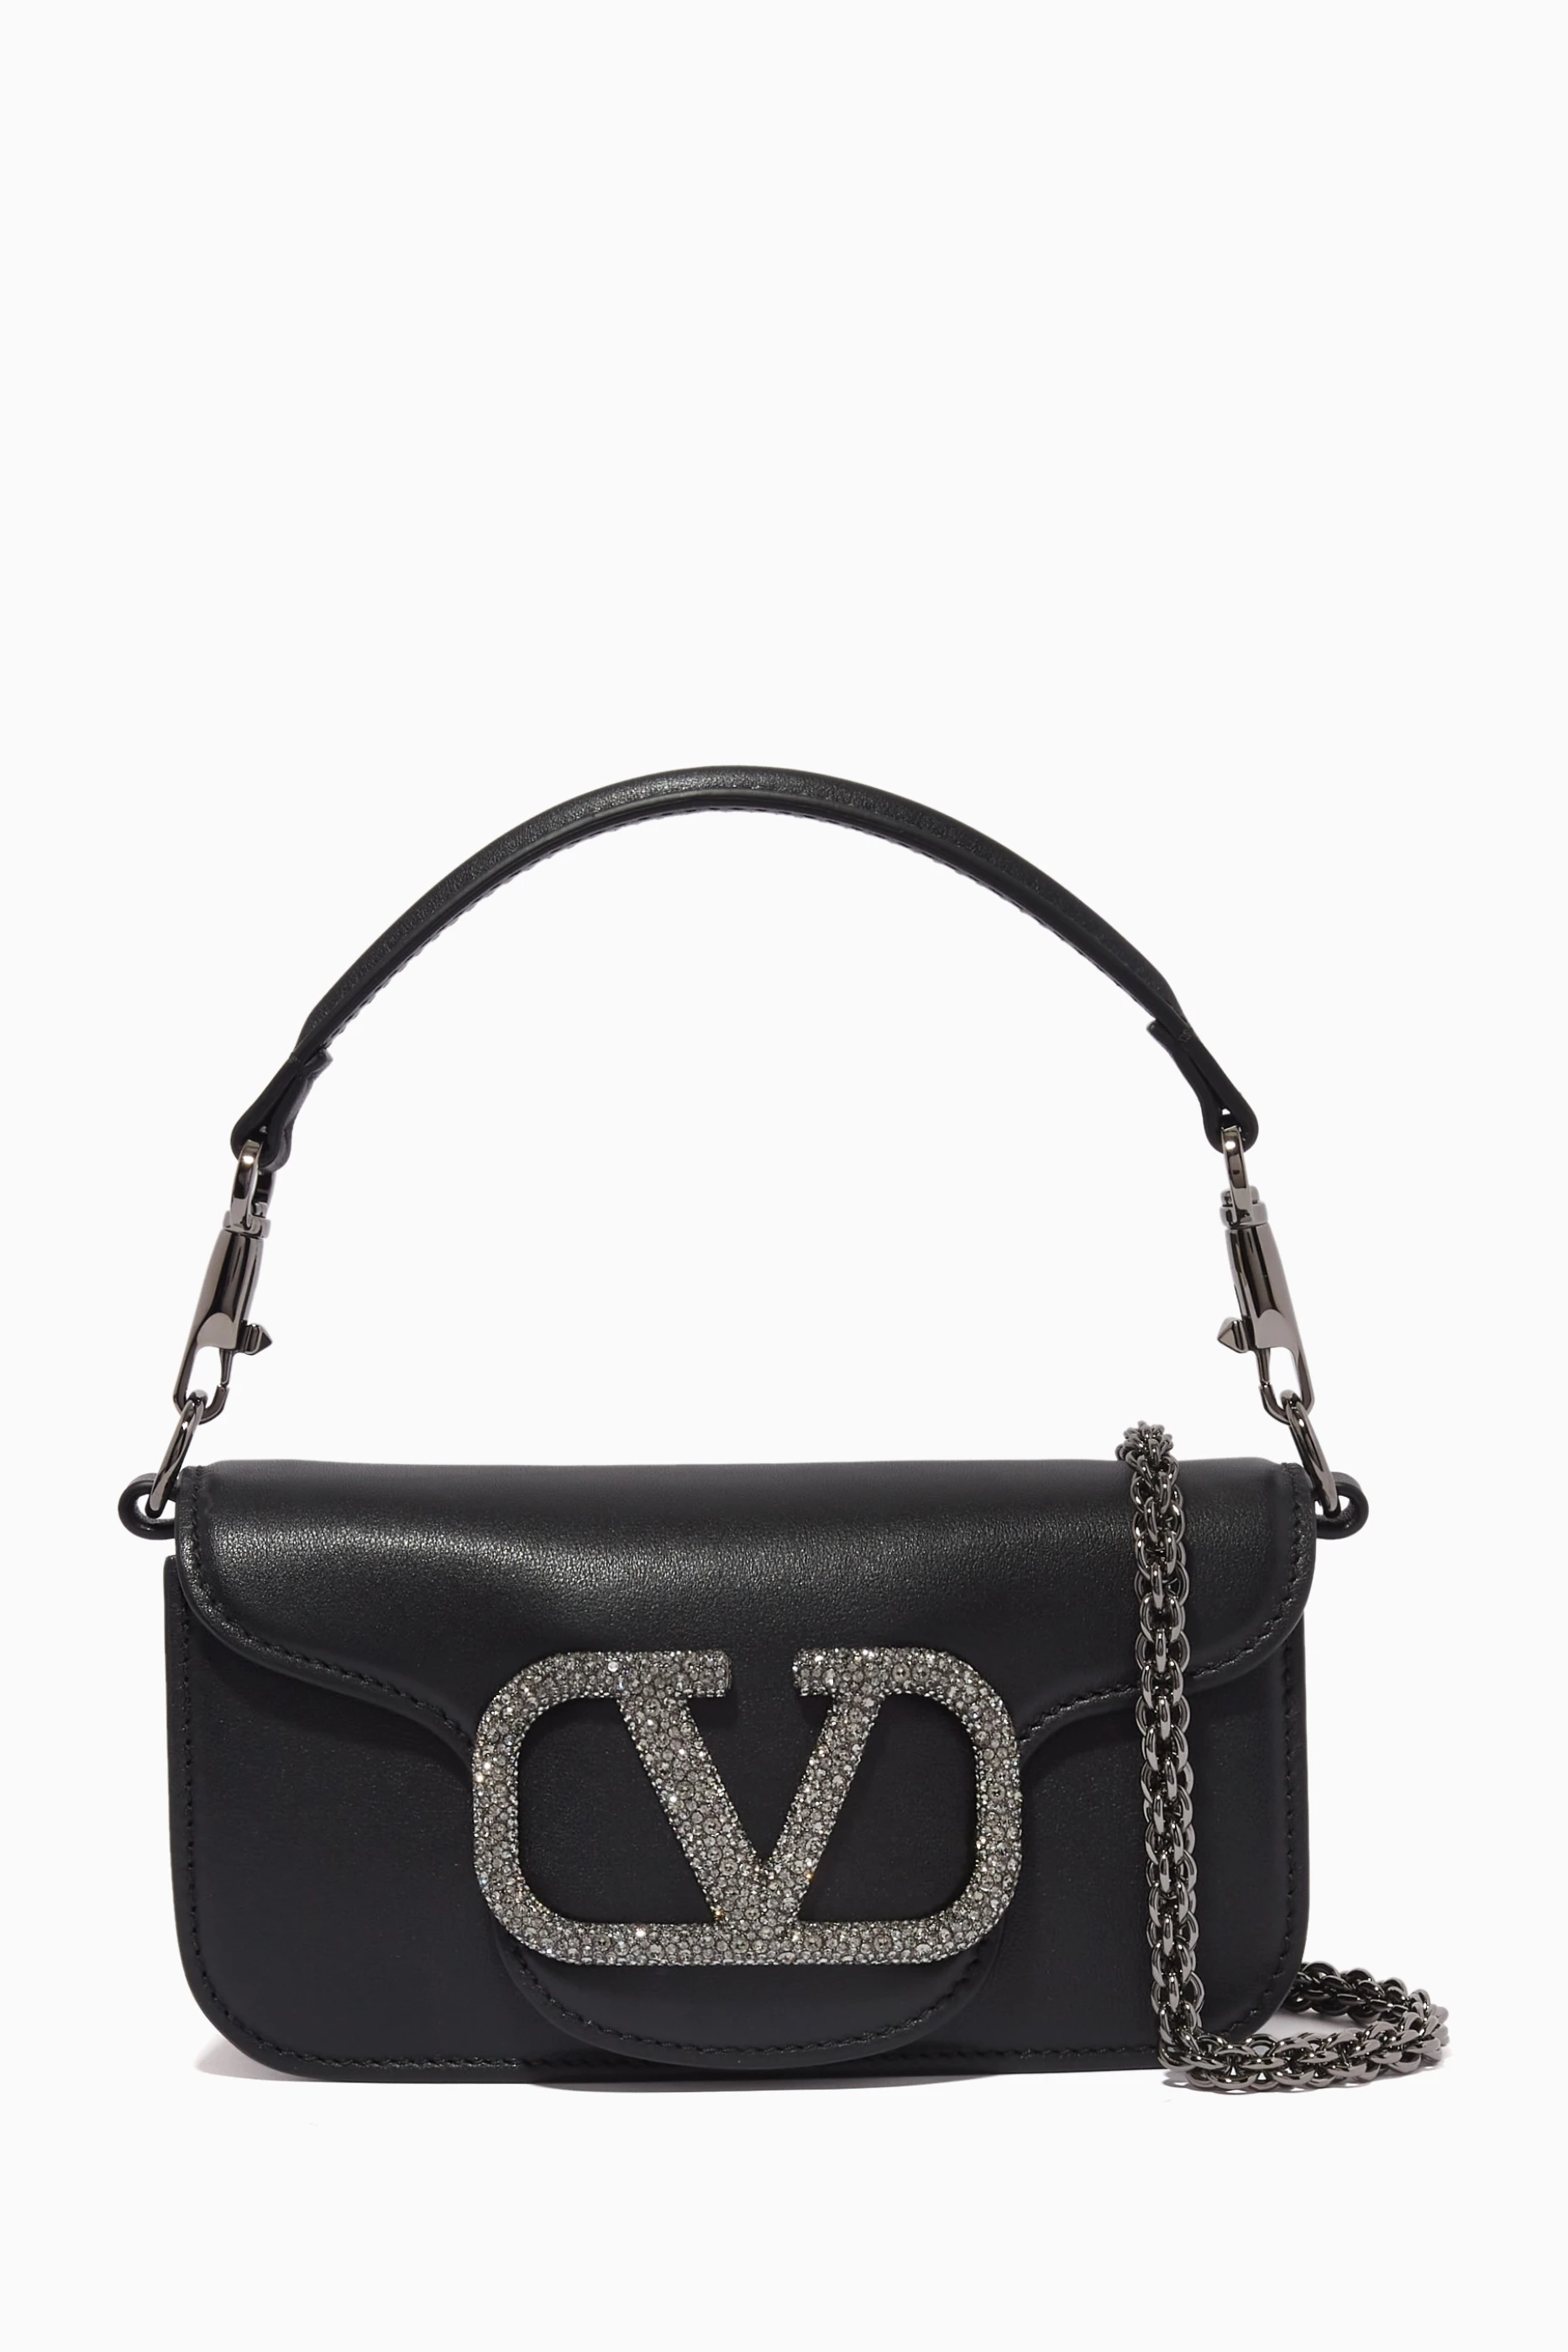 Valentino Garavani Women's Locò Small Shoulder Bag with Jewel Logo - Poudre